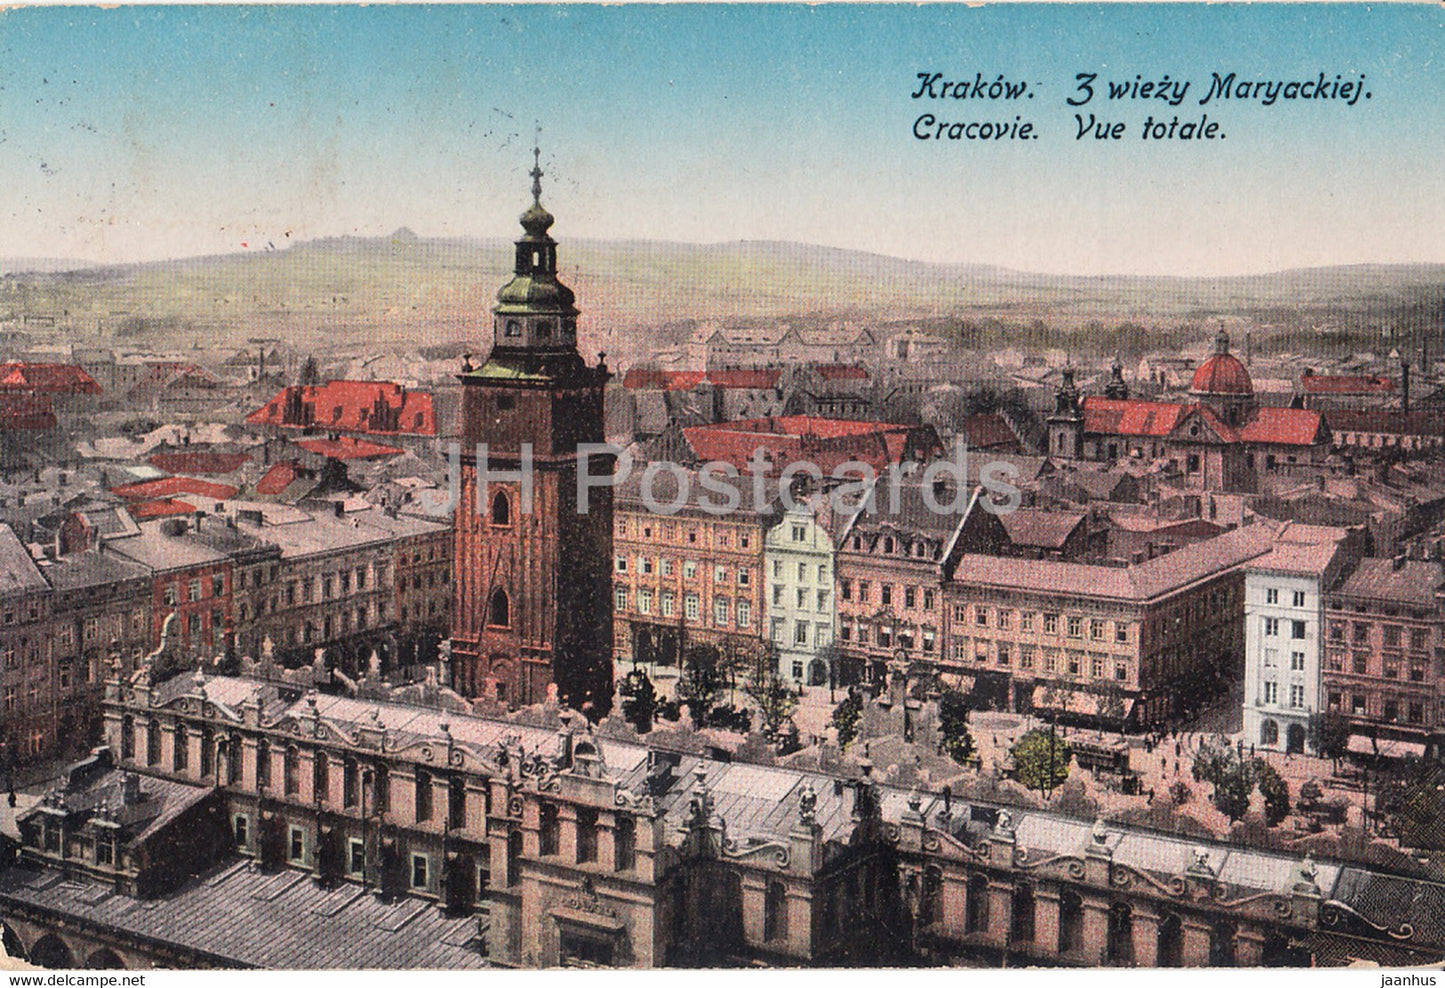 Krakow - Z wiezy Maryackiej - Cracovie - Vue Totale - old postcard - 1924 - Poland - used - JH Postcards